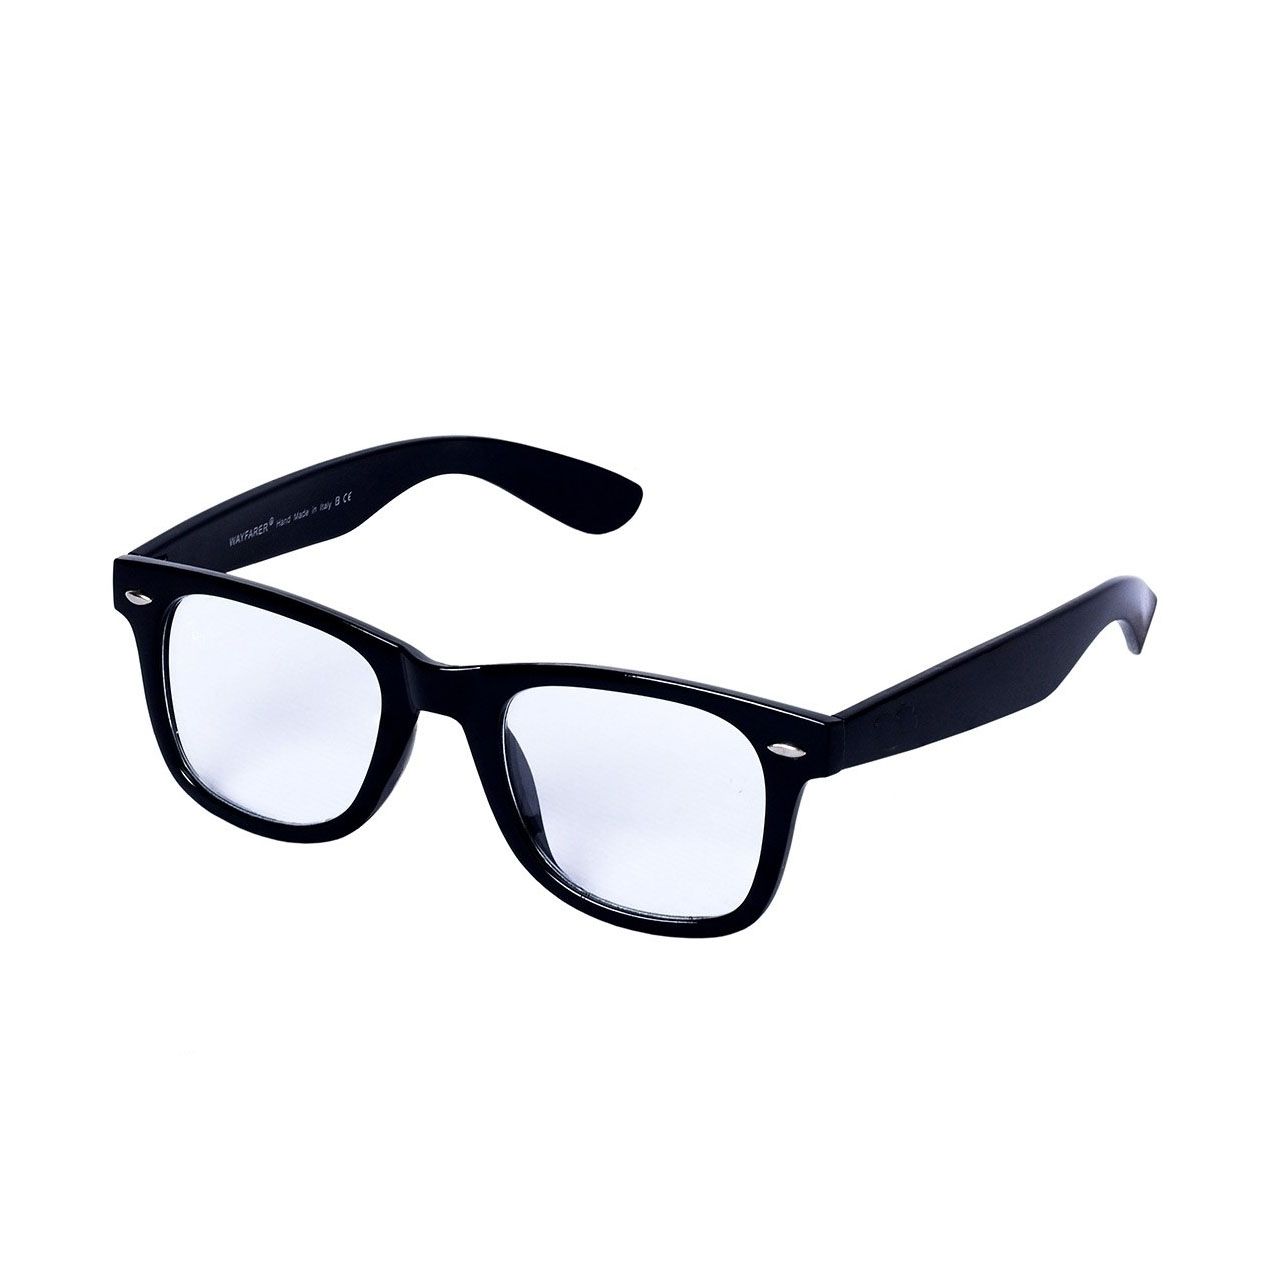 فریم عینک طبی مردانه مدل FY926 Rlei Zhen تک سایز -  - 1